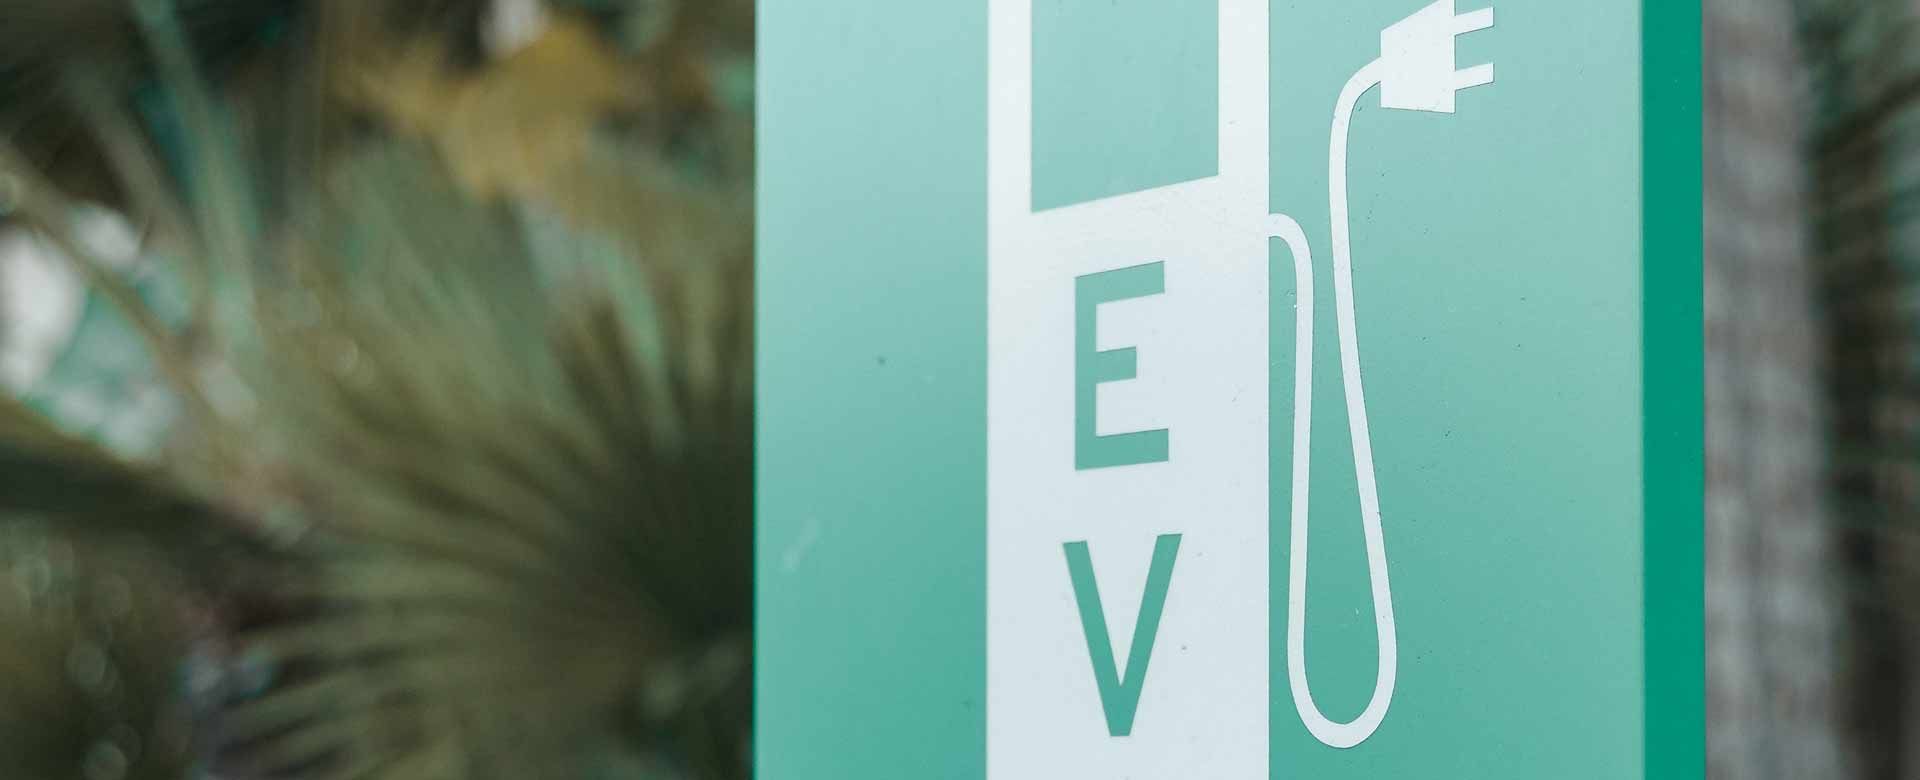 Electric vehicles (EV) partnership